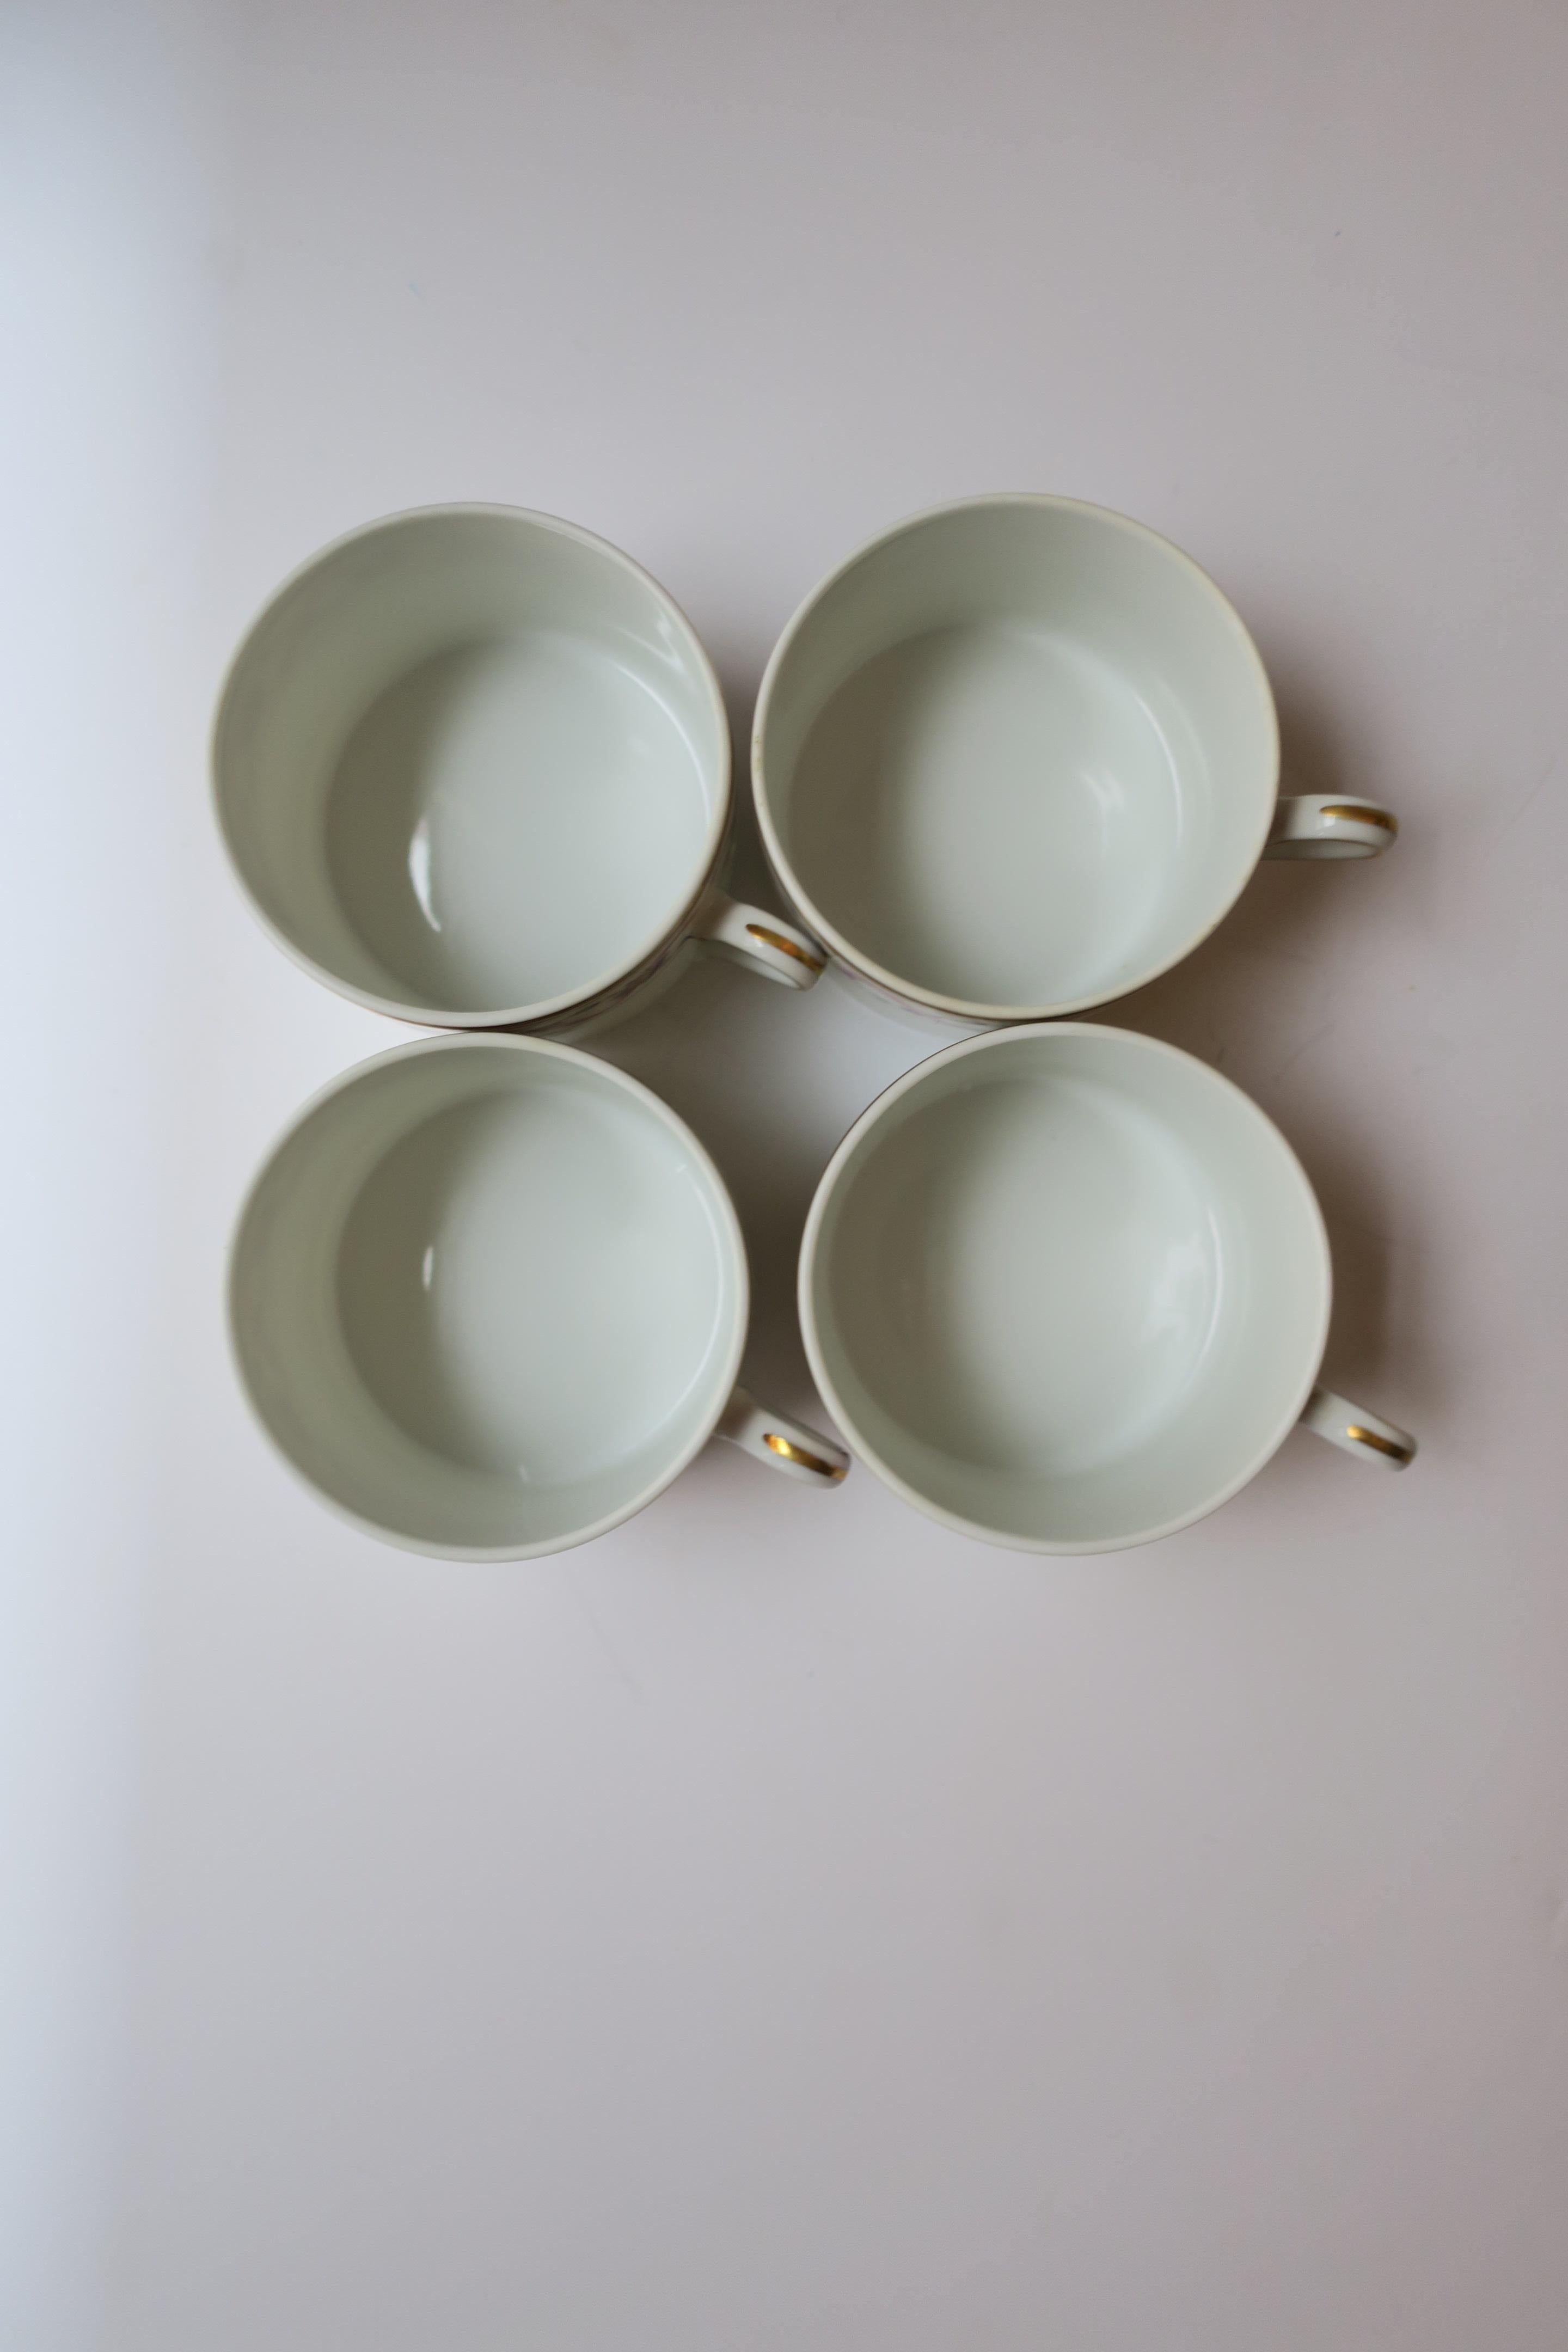 Richard Ginori Italian Porcelain Coffee or Teacups, Set of 4 For Sale 2